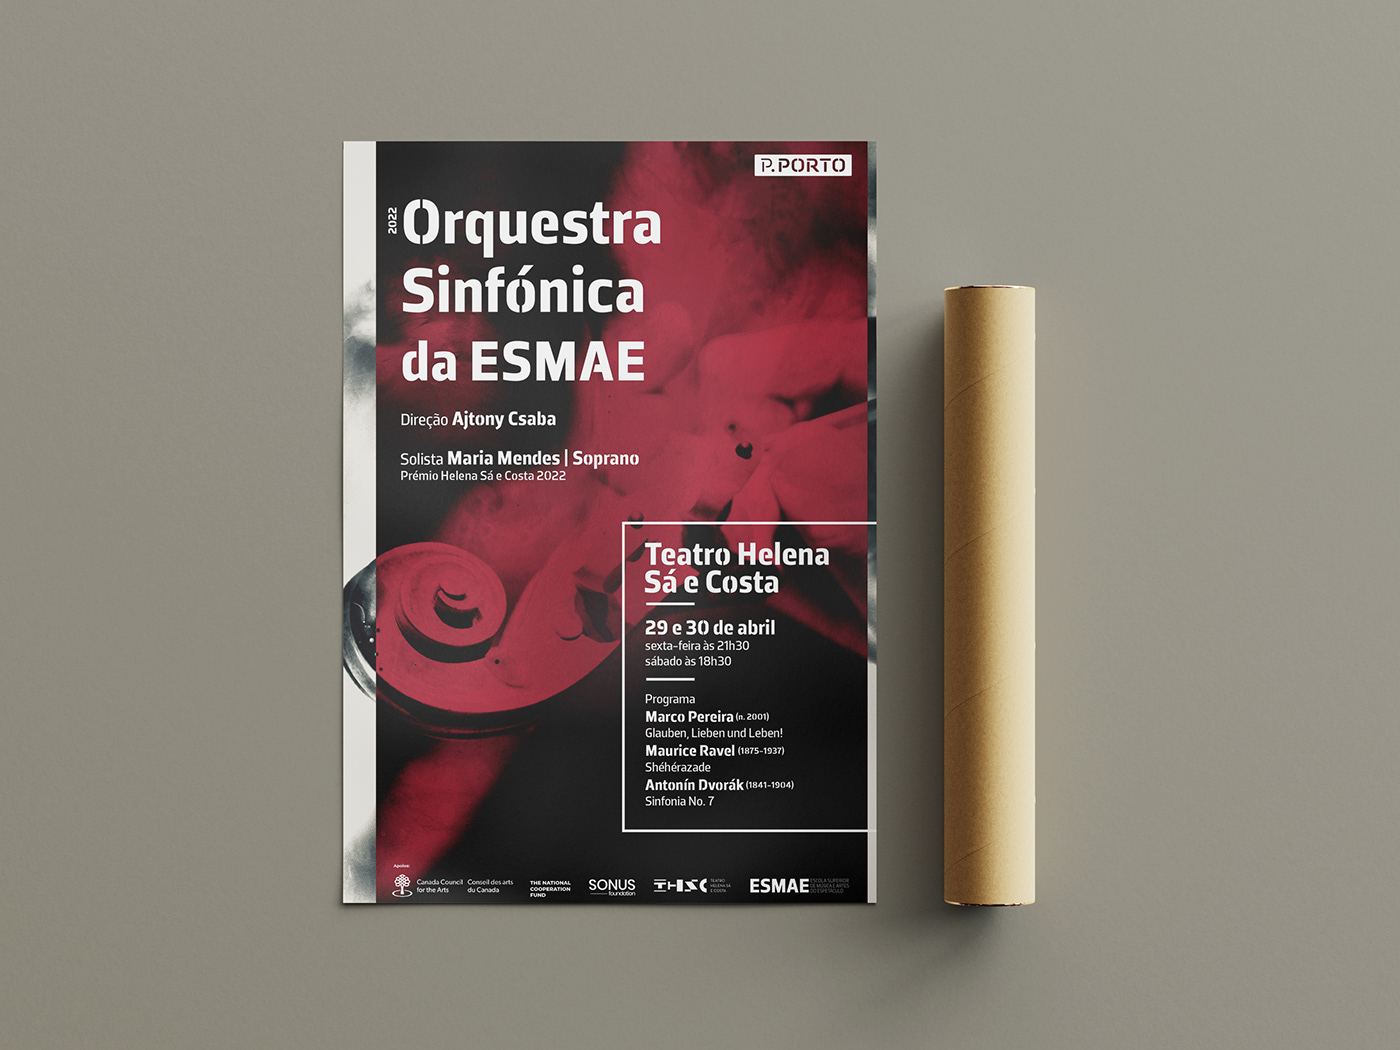 orchestra music orquestra ESMAE IPP ajtony csaba helena sá e costa PPorto sinfonica THSC